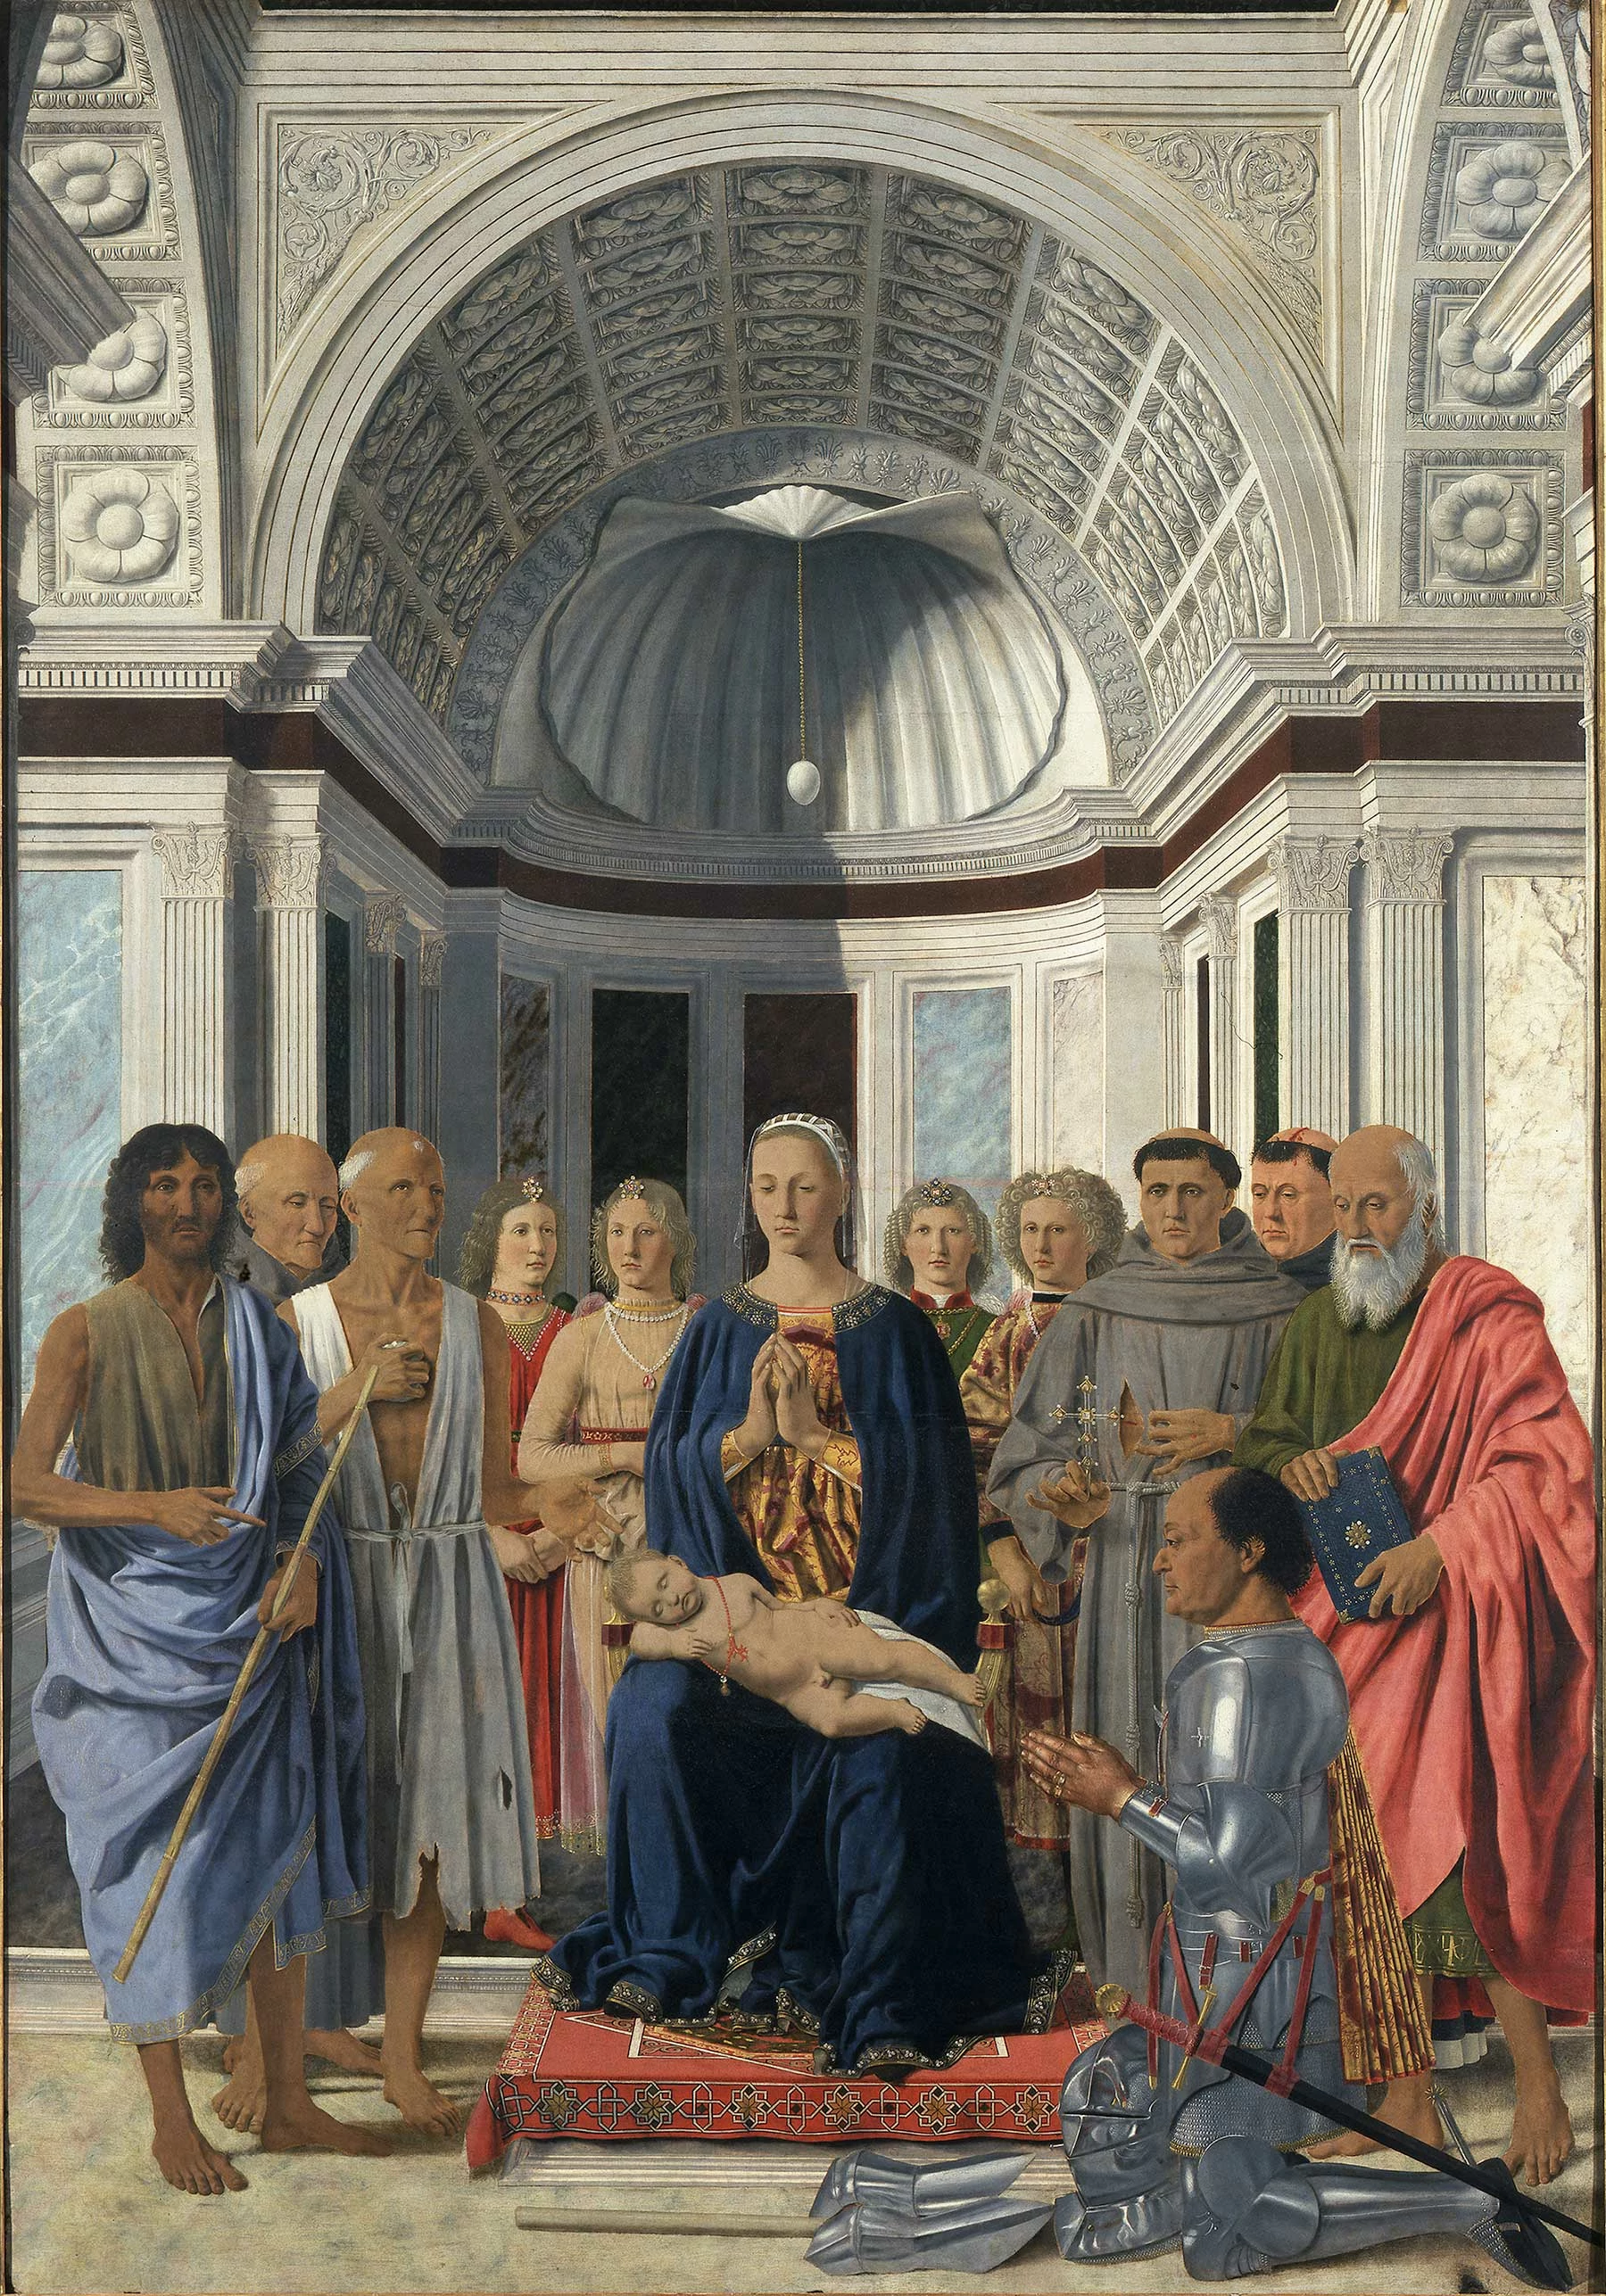 The Virgin with Child, Angels and Saints, Piero della Francesca